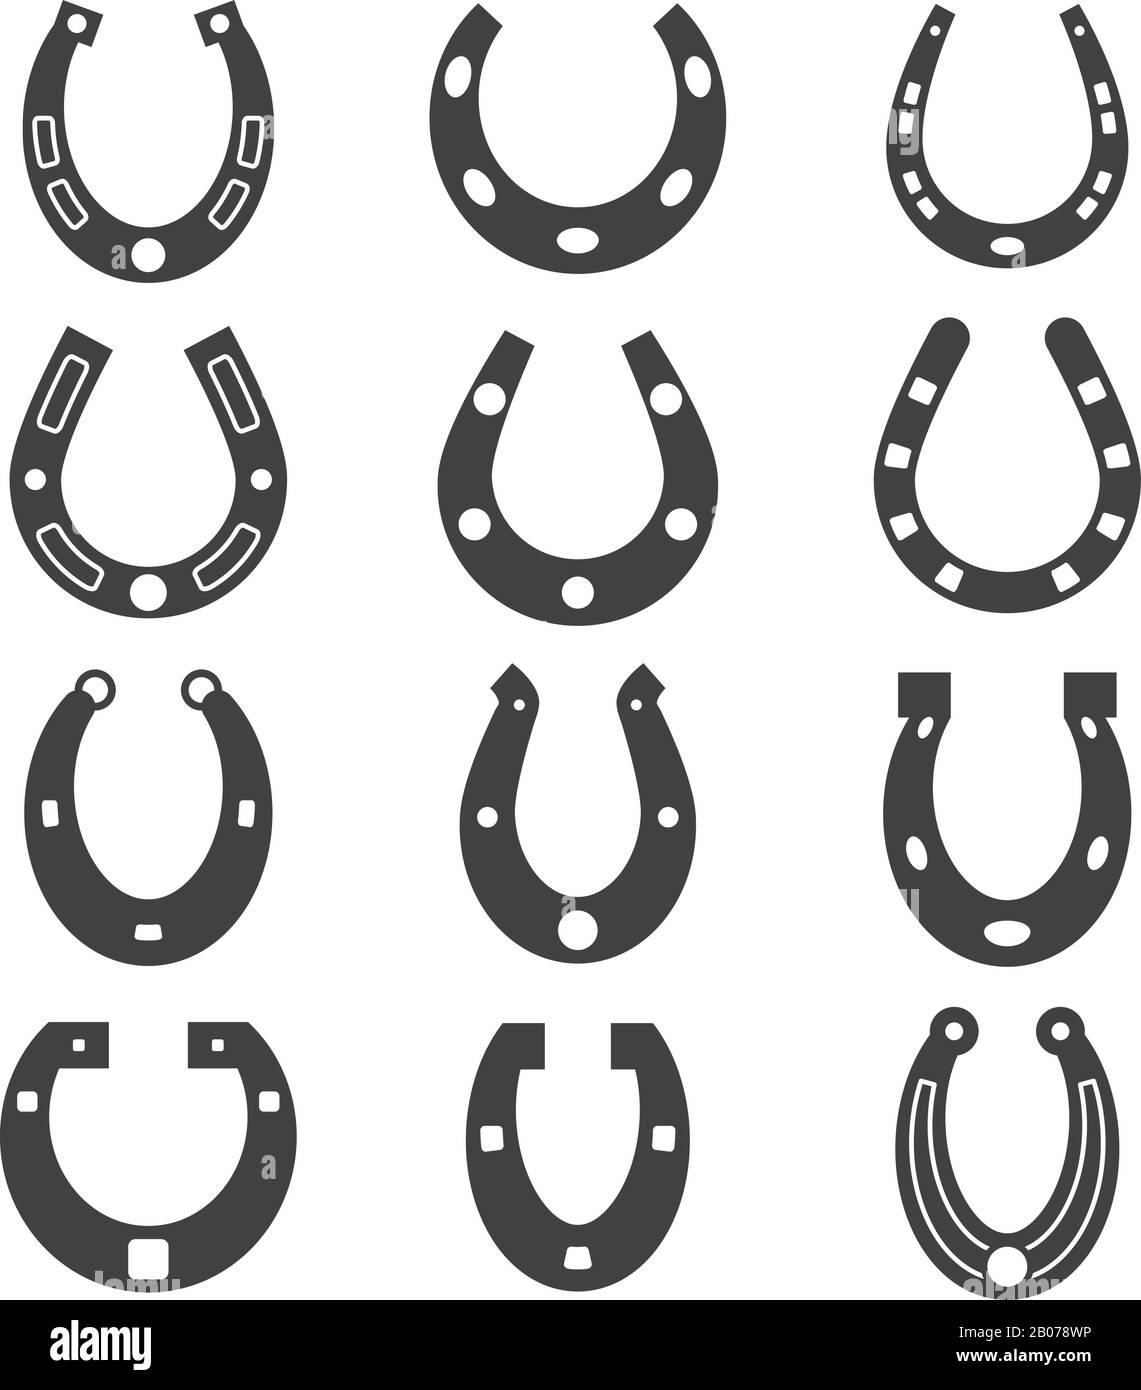 Hufeisenvektor-Symbole, Glückssymbole gesetzt. Silhouette der Pferdeschuh-Illustration Stock Vektor